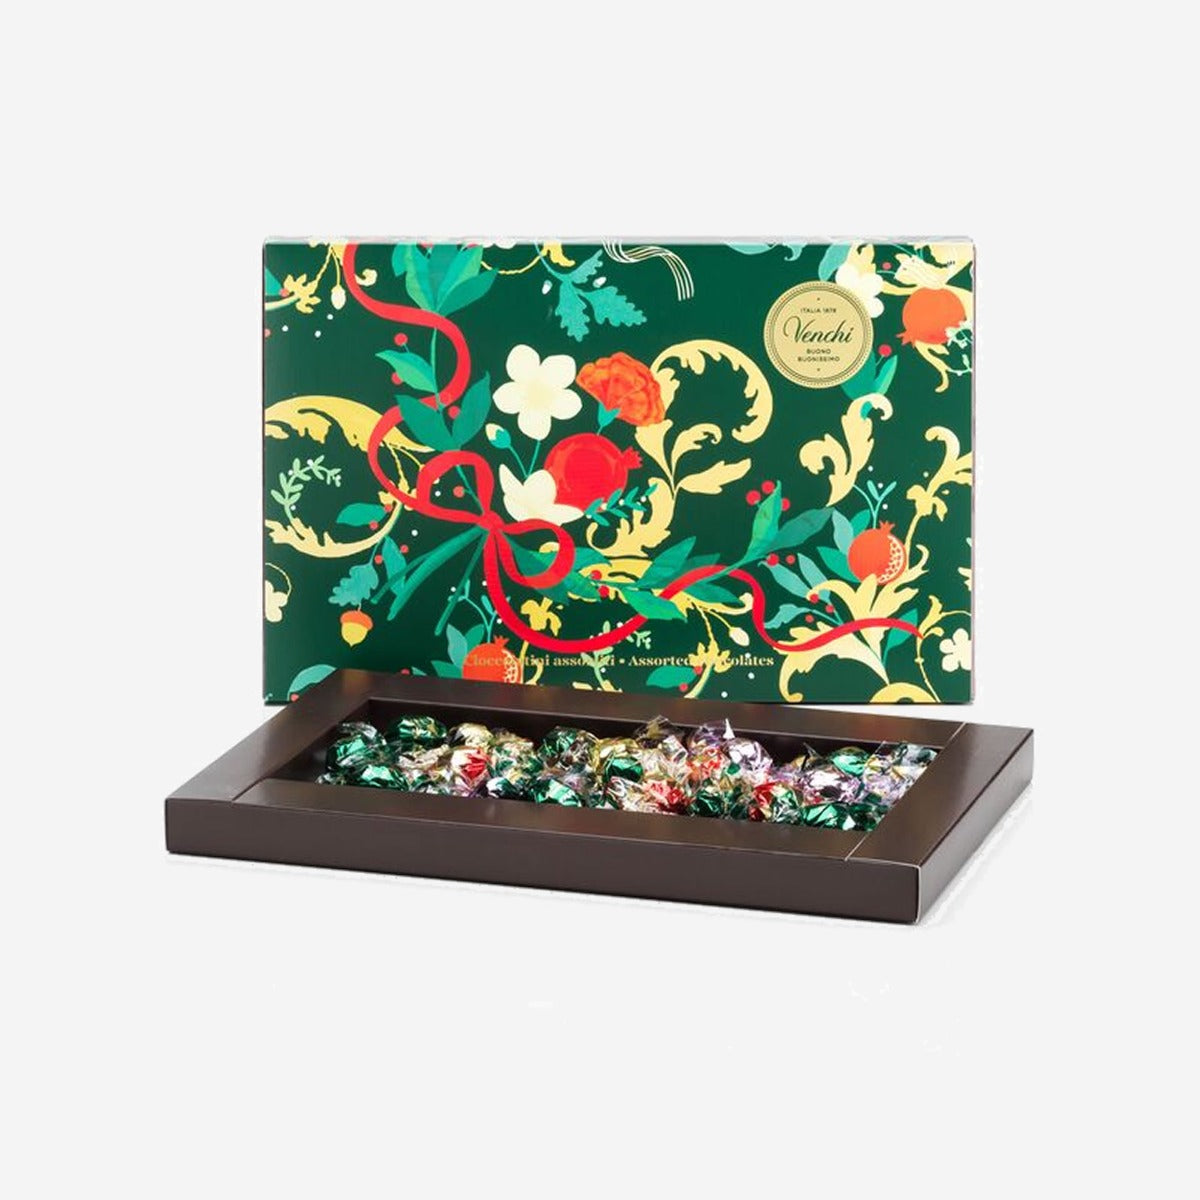 Venchi Baroque Christmas Gift Box